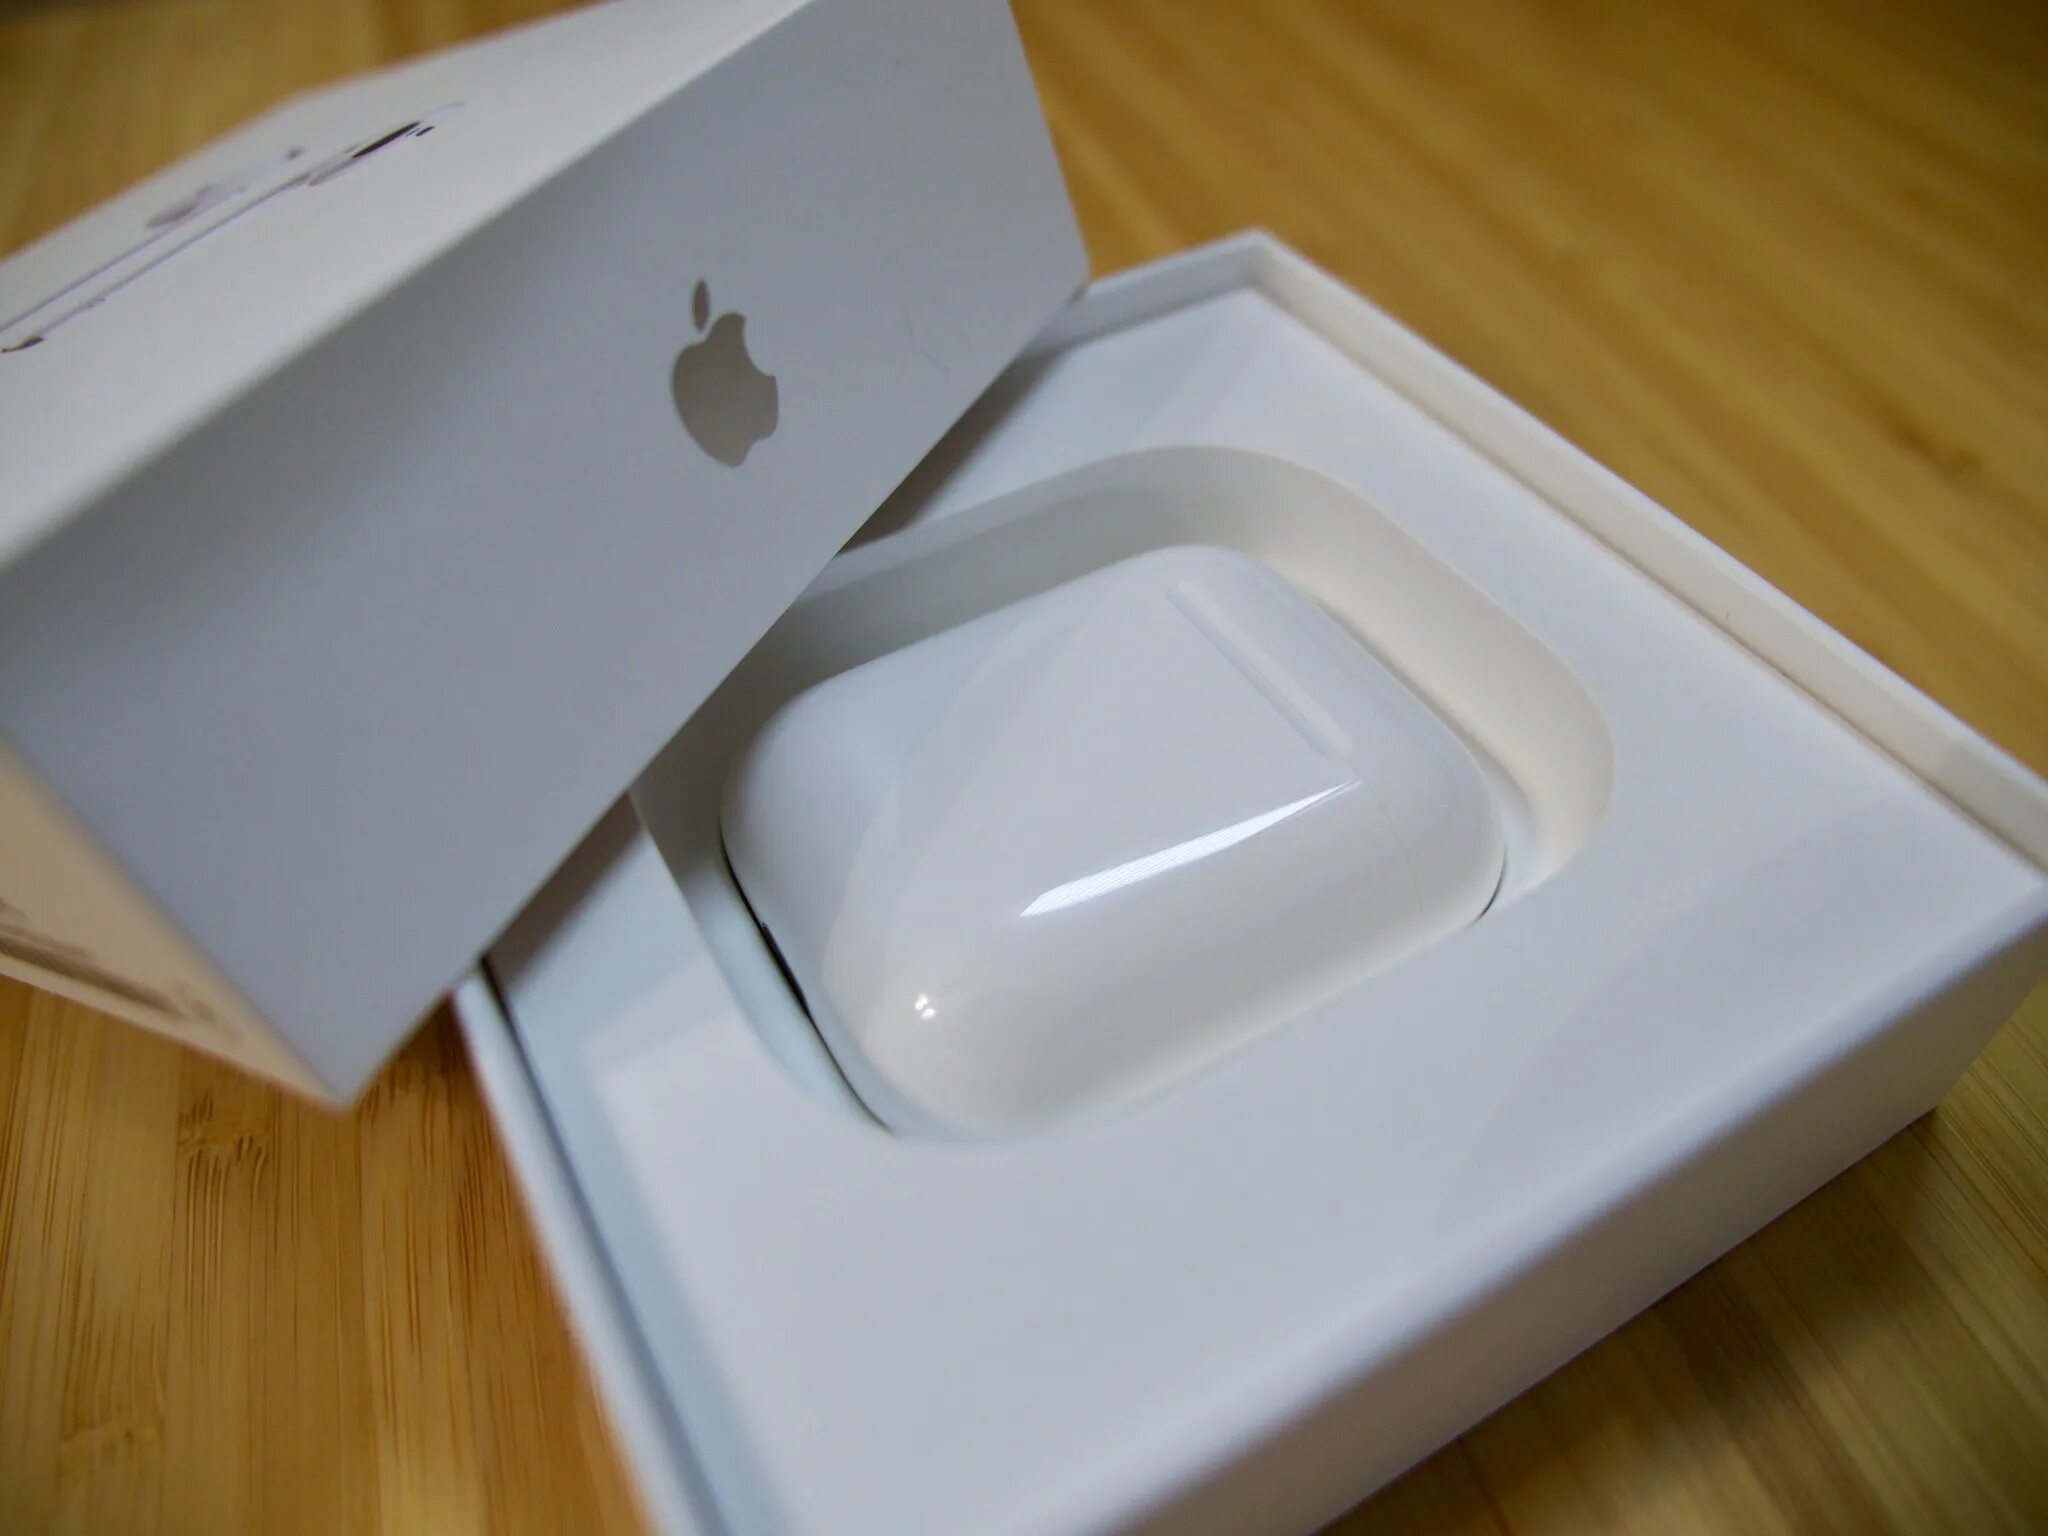 Apple AIRPODS 2 коробка. Apple AIRPODS Pro 2 коробка. Аирподсы эпл. Apple аирподс коробка. Коробка наушников airpods